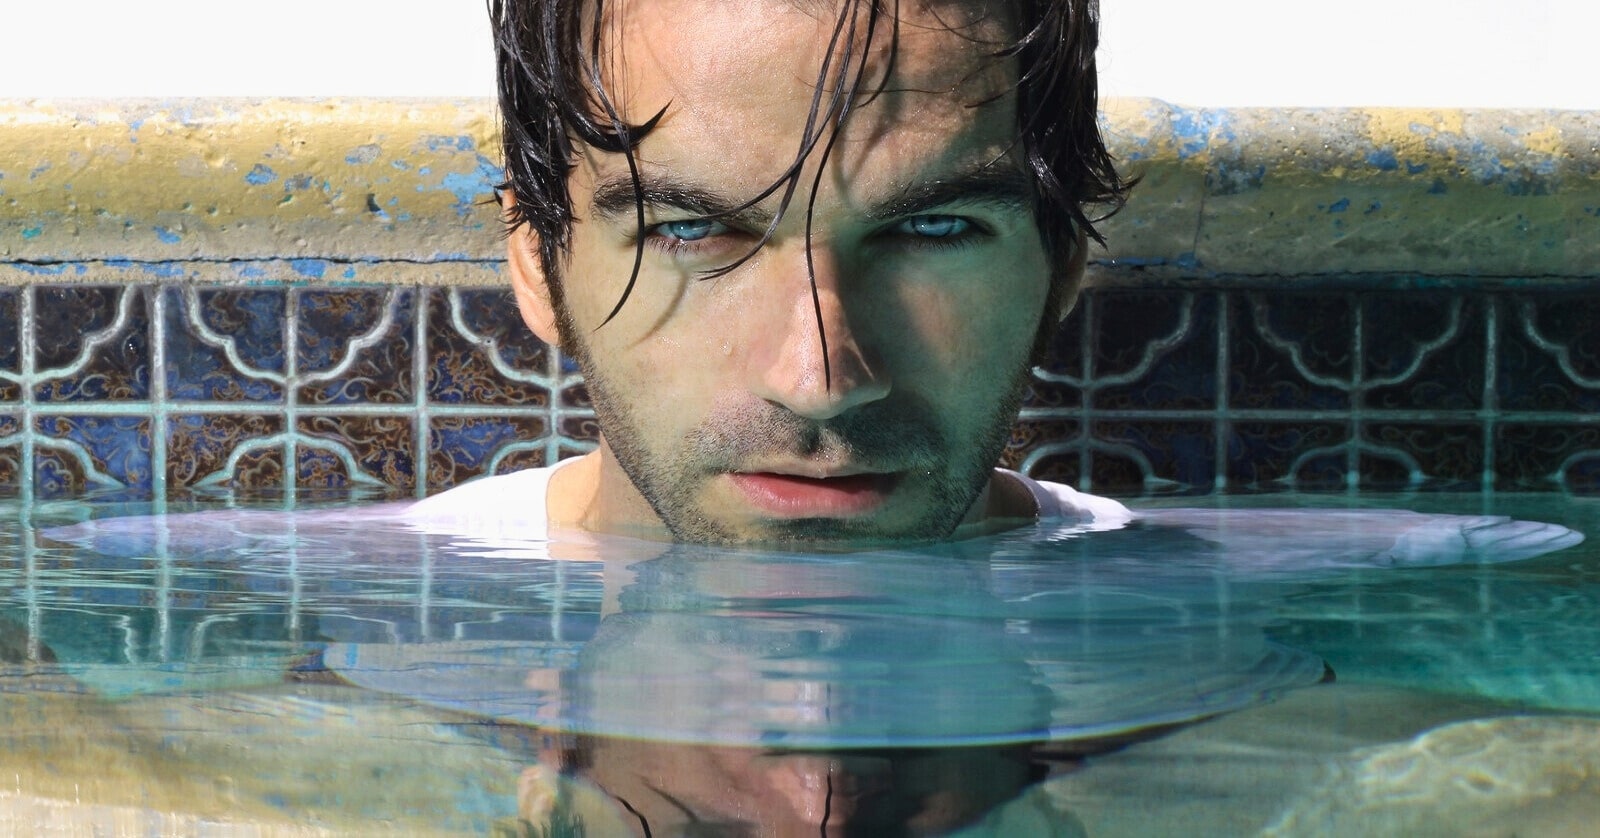 narcissist man in swimming pool